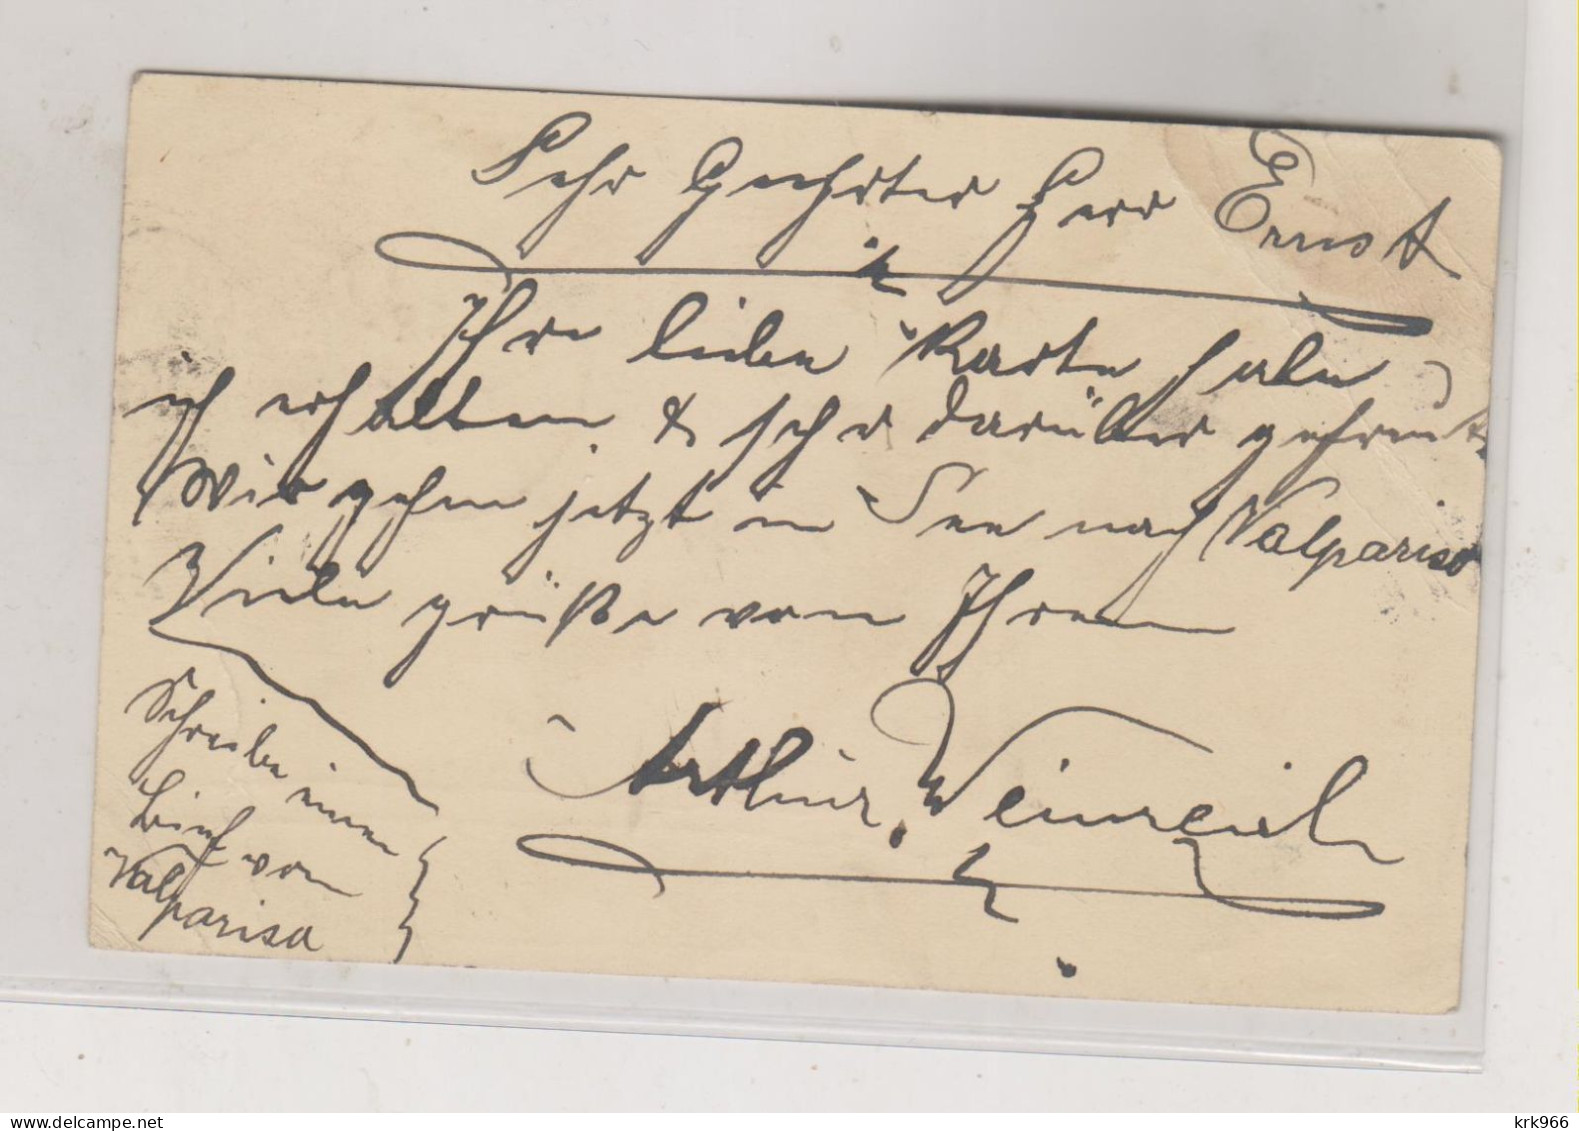 AUSTRALIA,1897 QUEENSLAND BRISBANE  Nice Postal Stationery To Germany - Cartas & Documentos